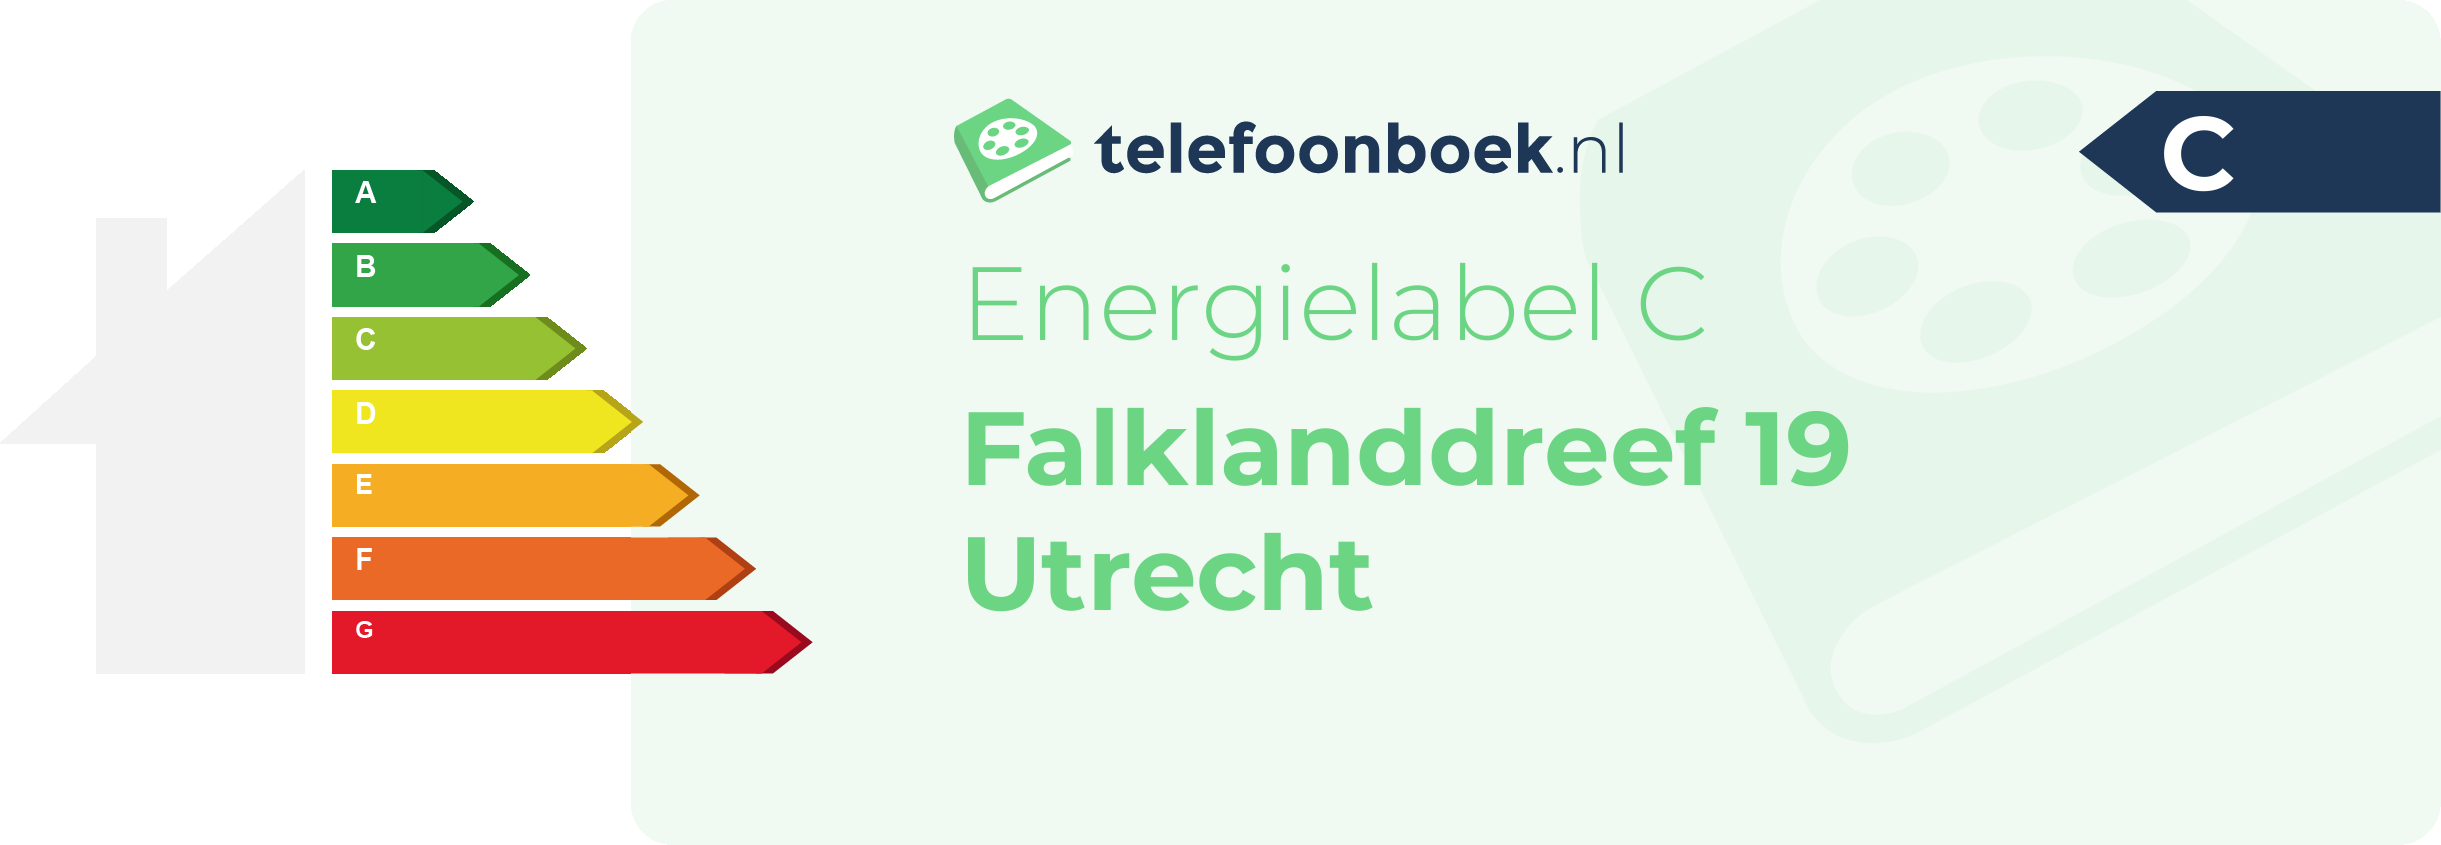 Energielabel Falklanddreef 19 Utrecht